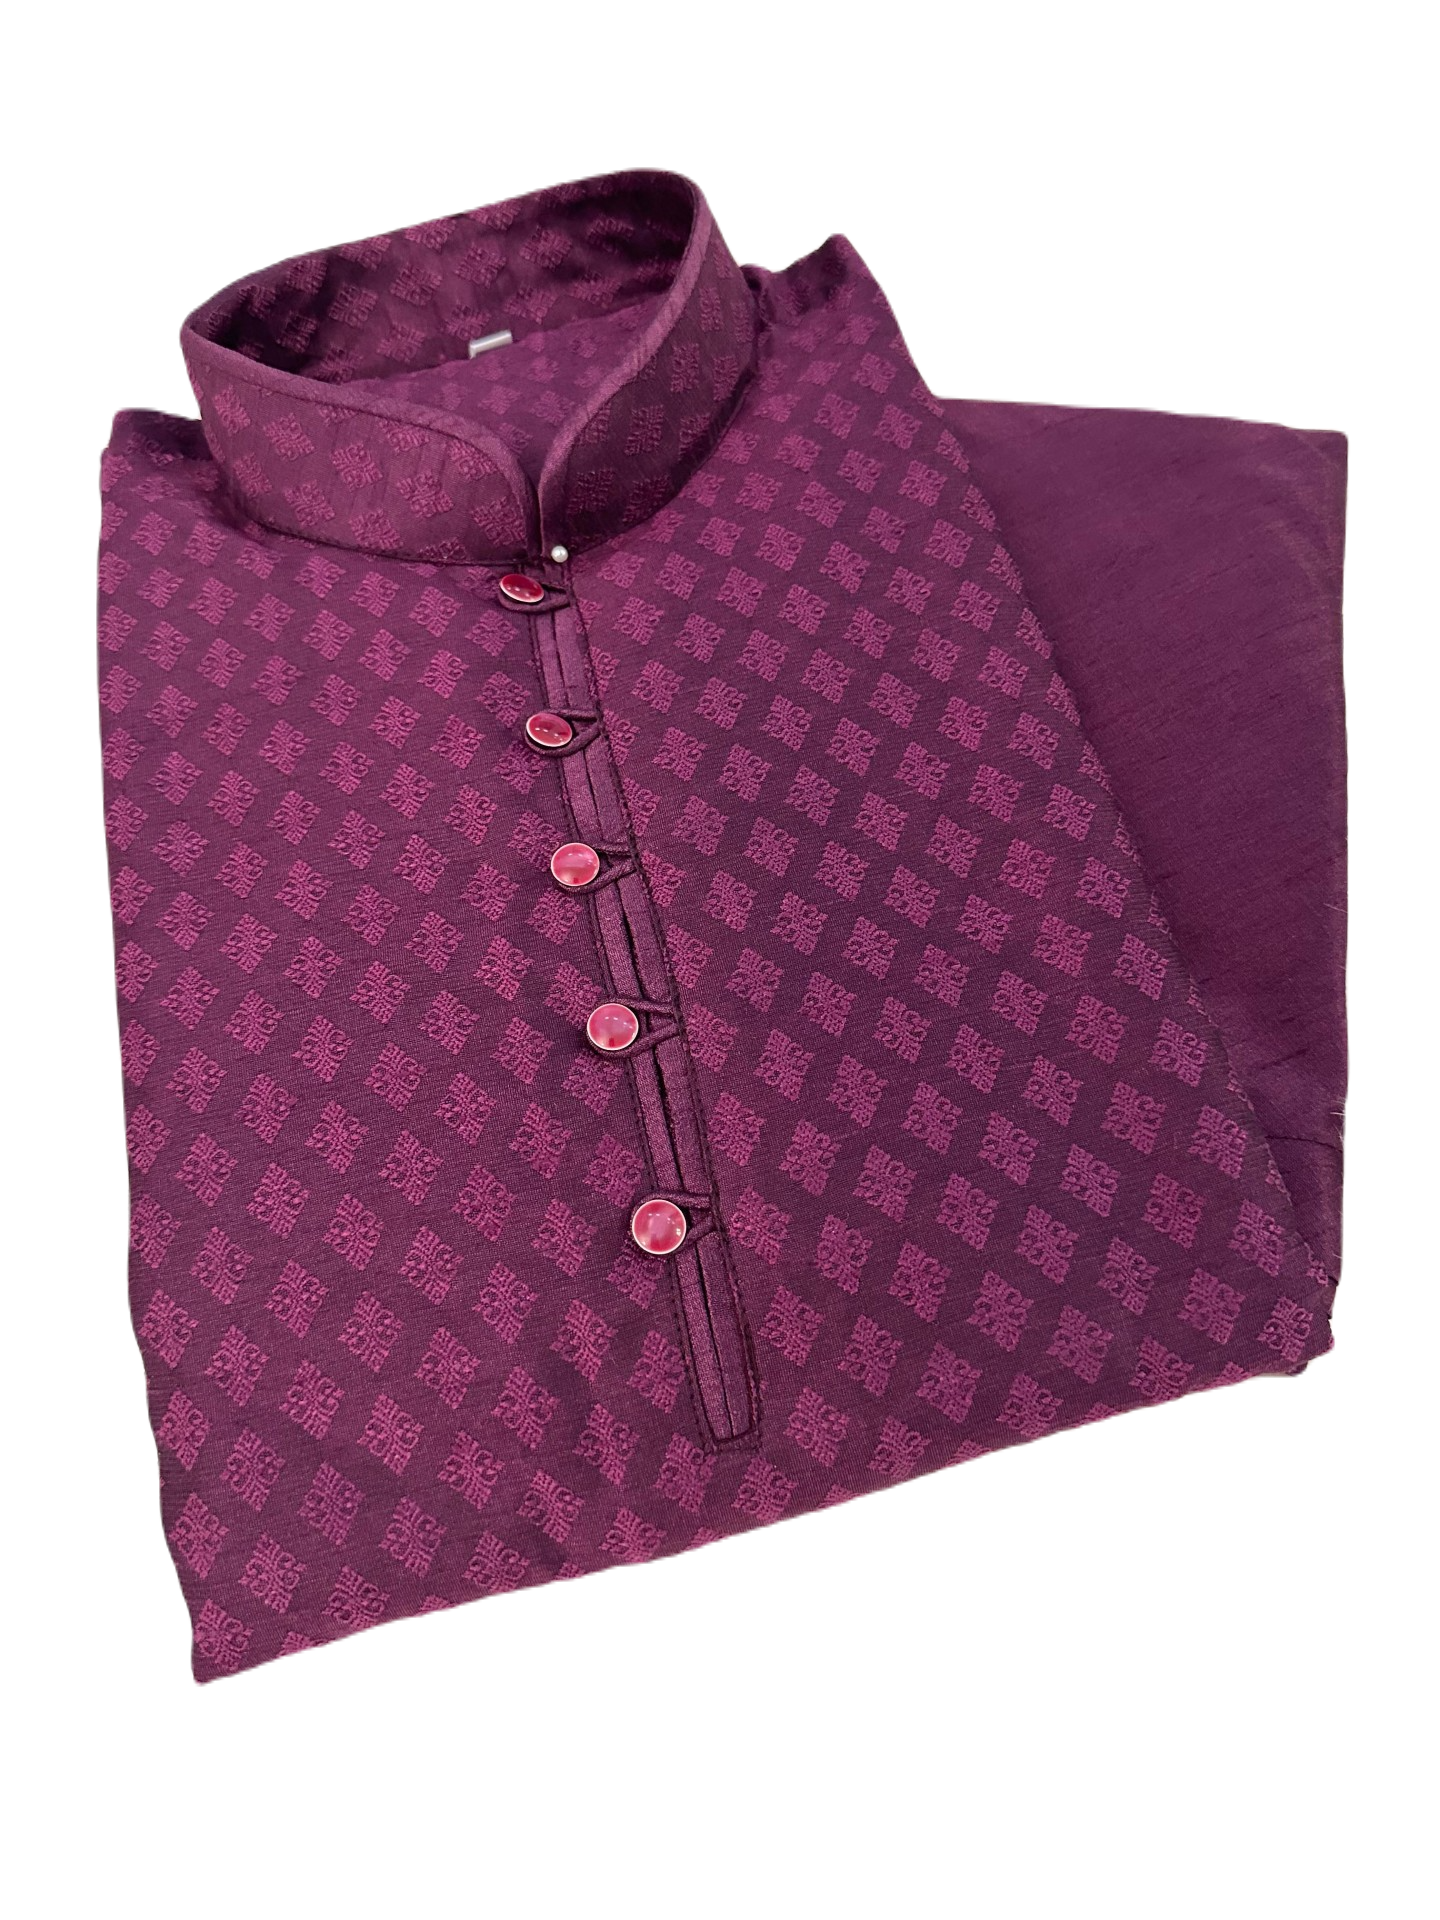 Size 48, Man's Sangria Violet Shade Jacquard Silk 2 Piece Kurta Pajama Set, Father & Son's Outfit, DM -1061